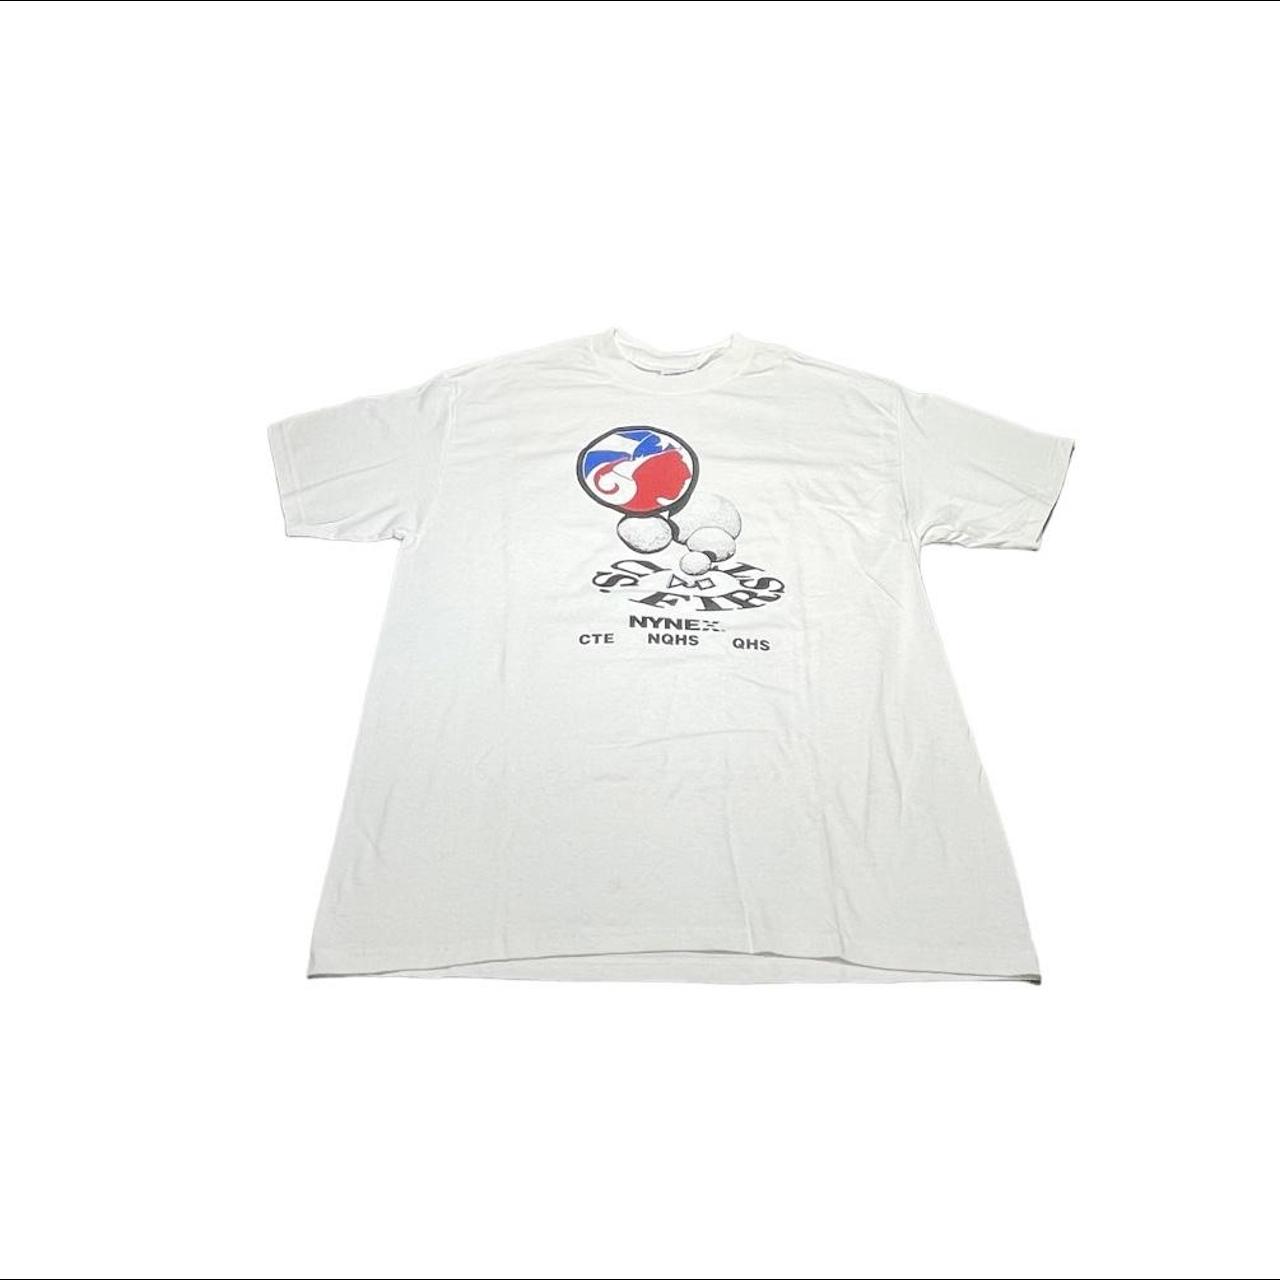 Lee Men's T-Shirt - Multi - L